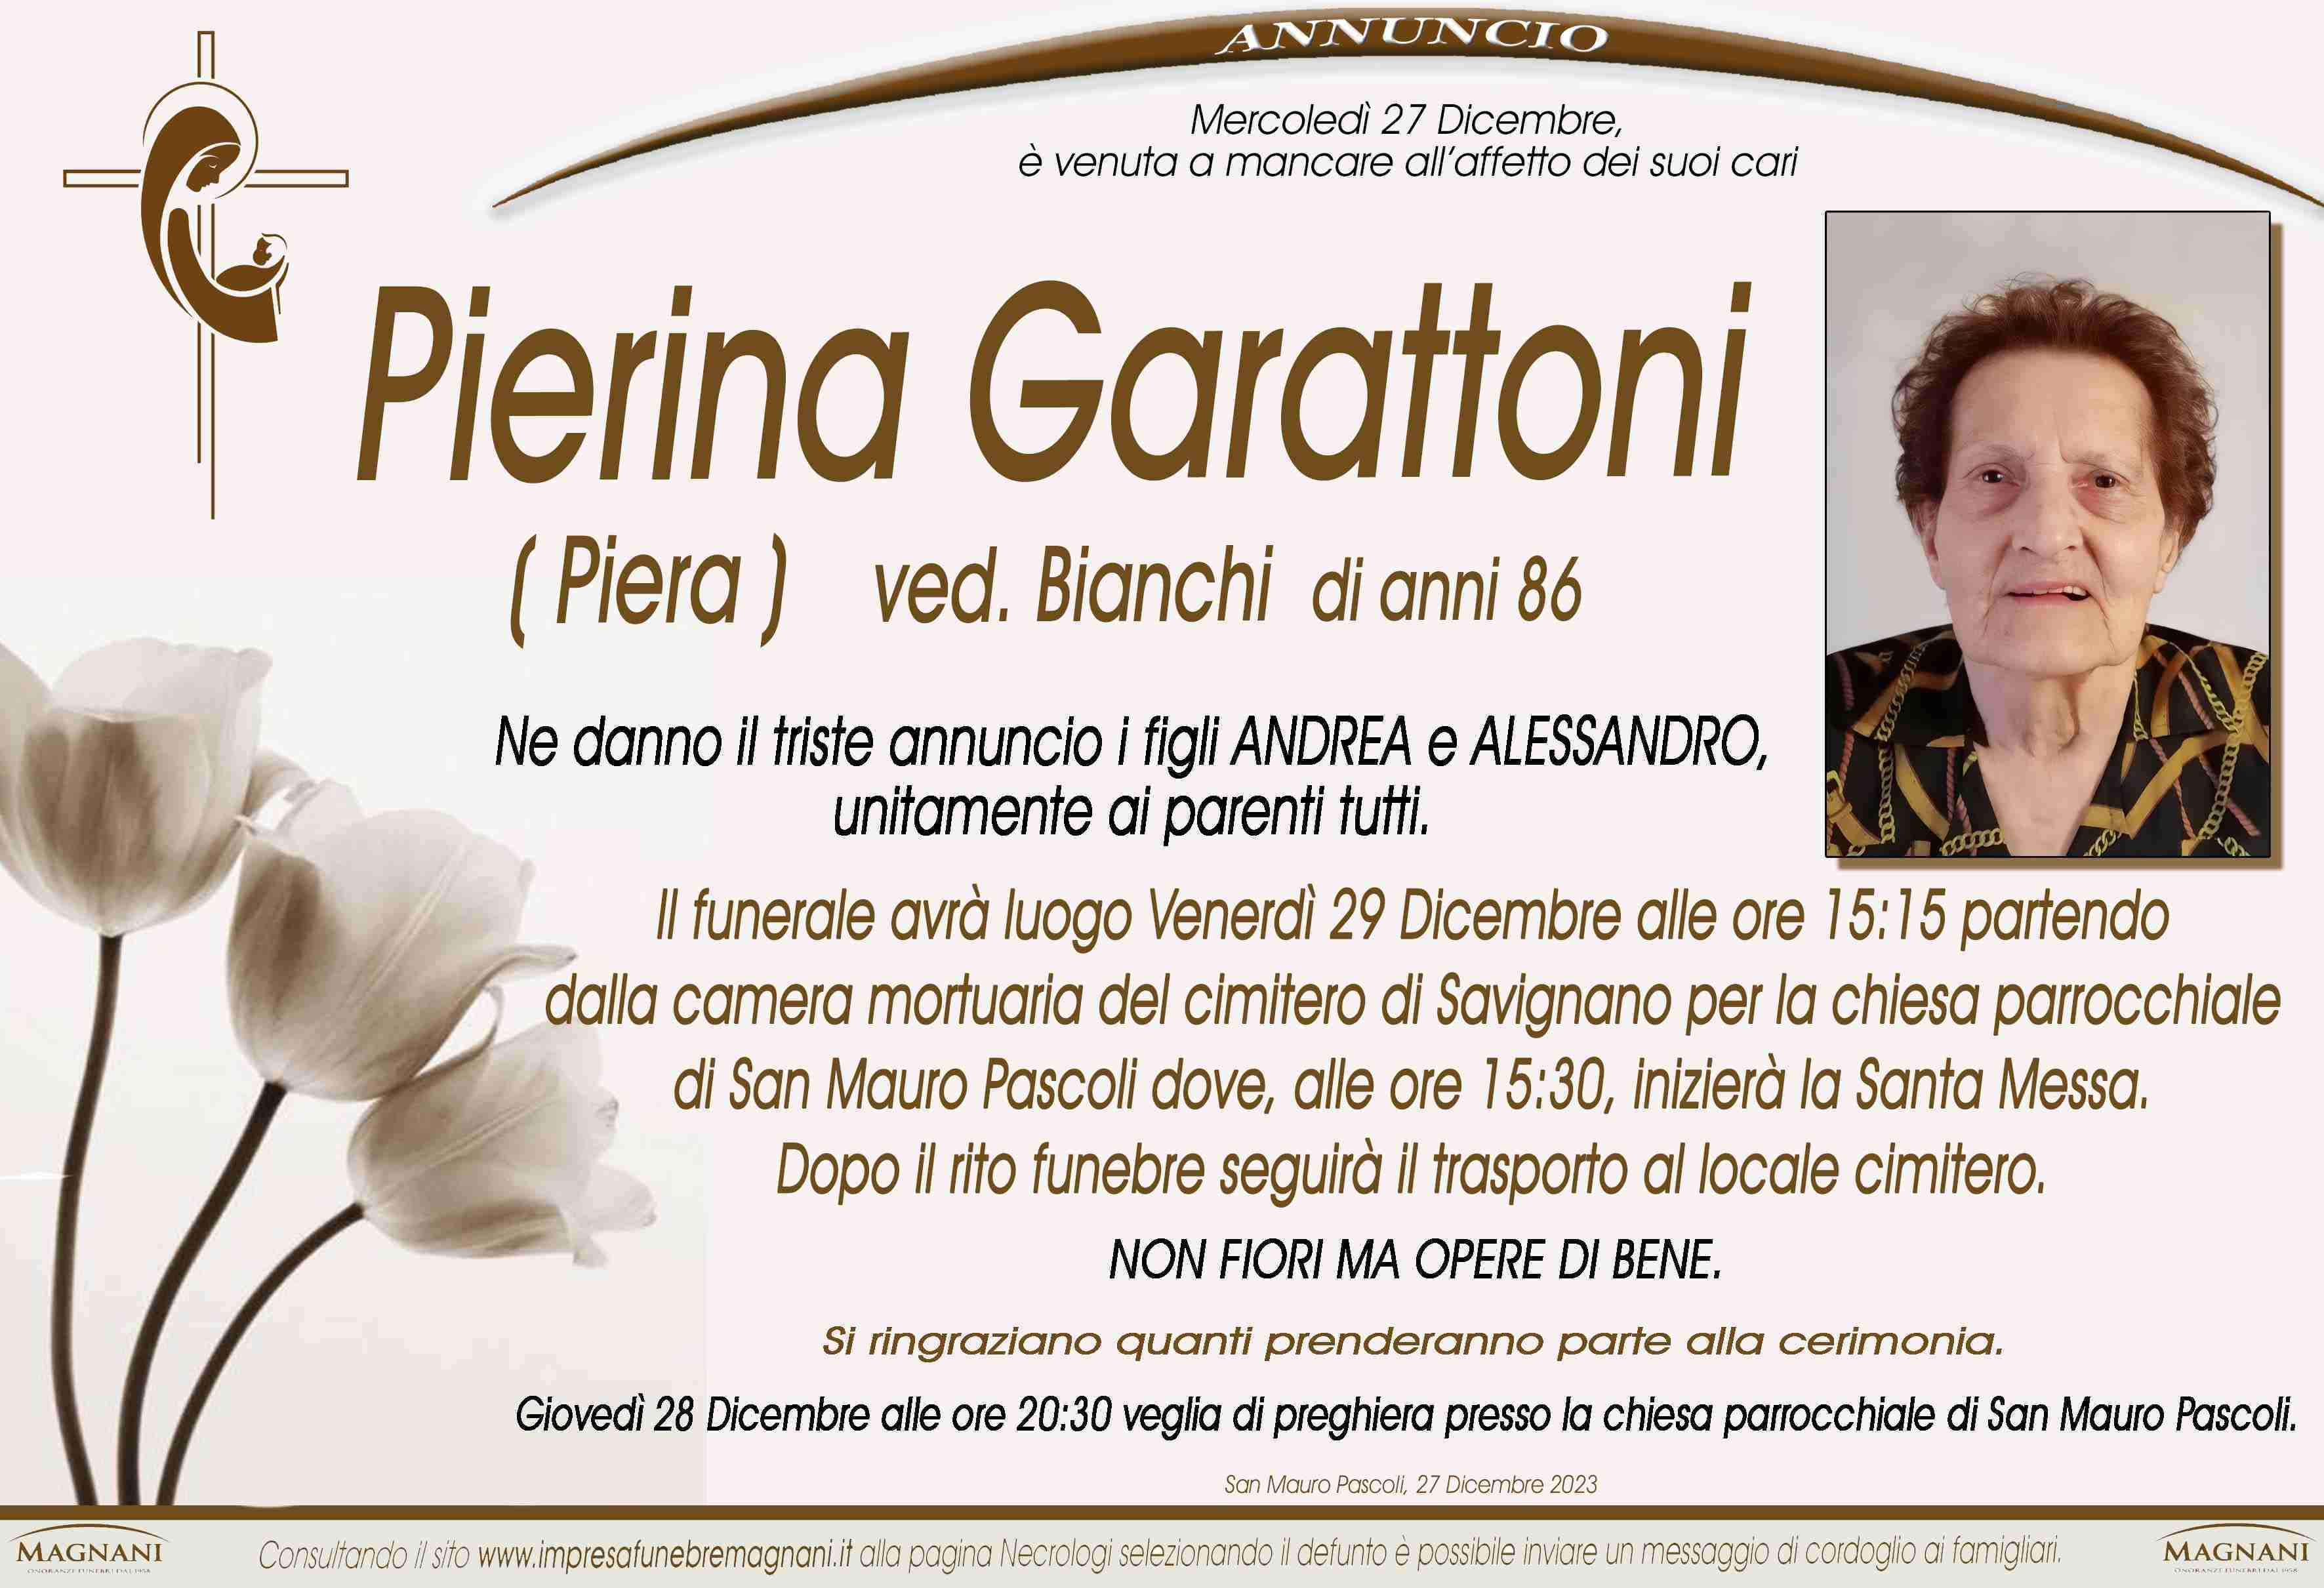 Pierina Garattoni